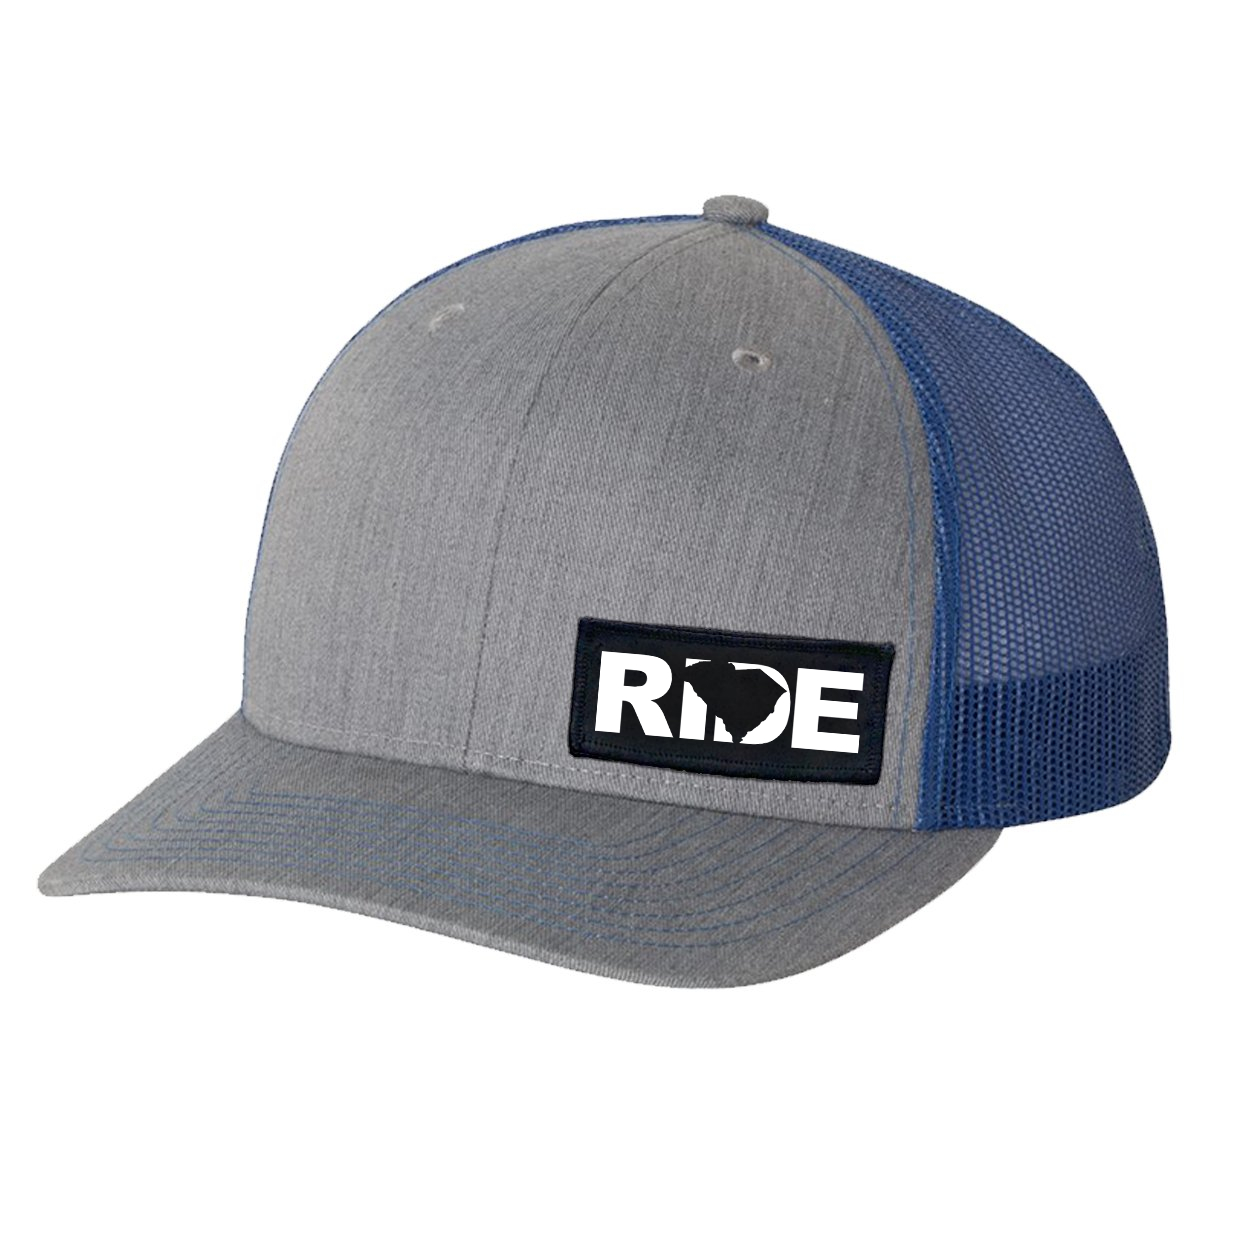 Ride South Carolina Night Out Woven Patch Snapback Trucker Hat Heather Grey/Royal (White Logo)